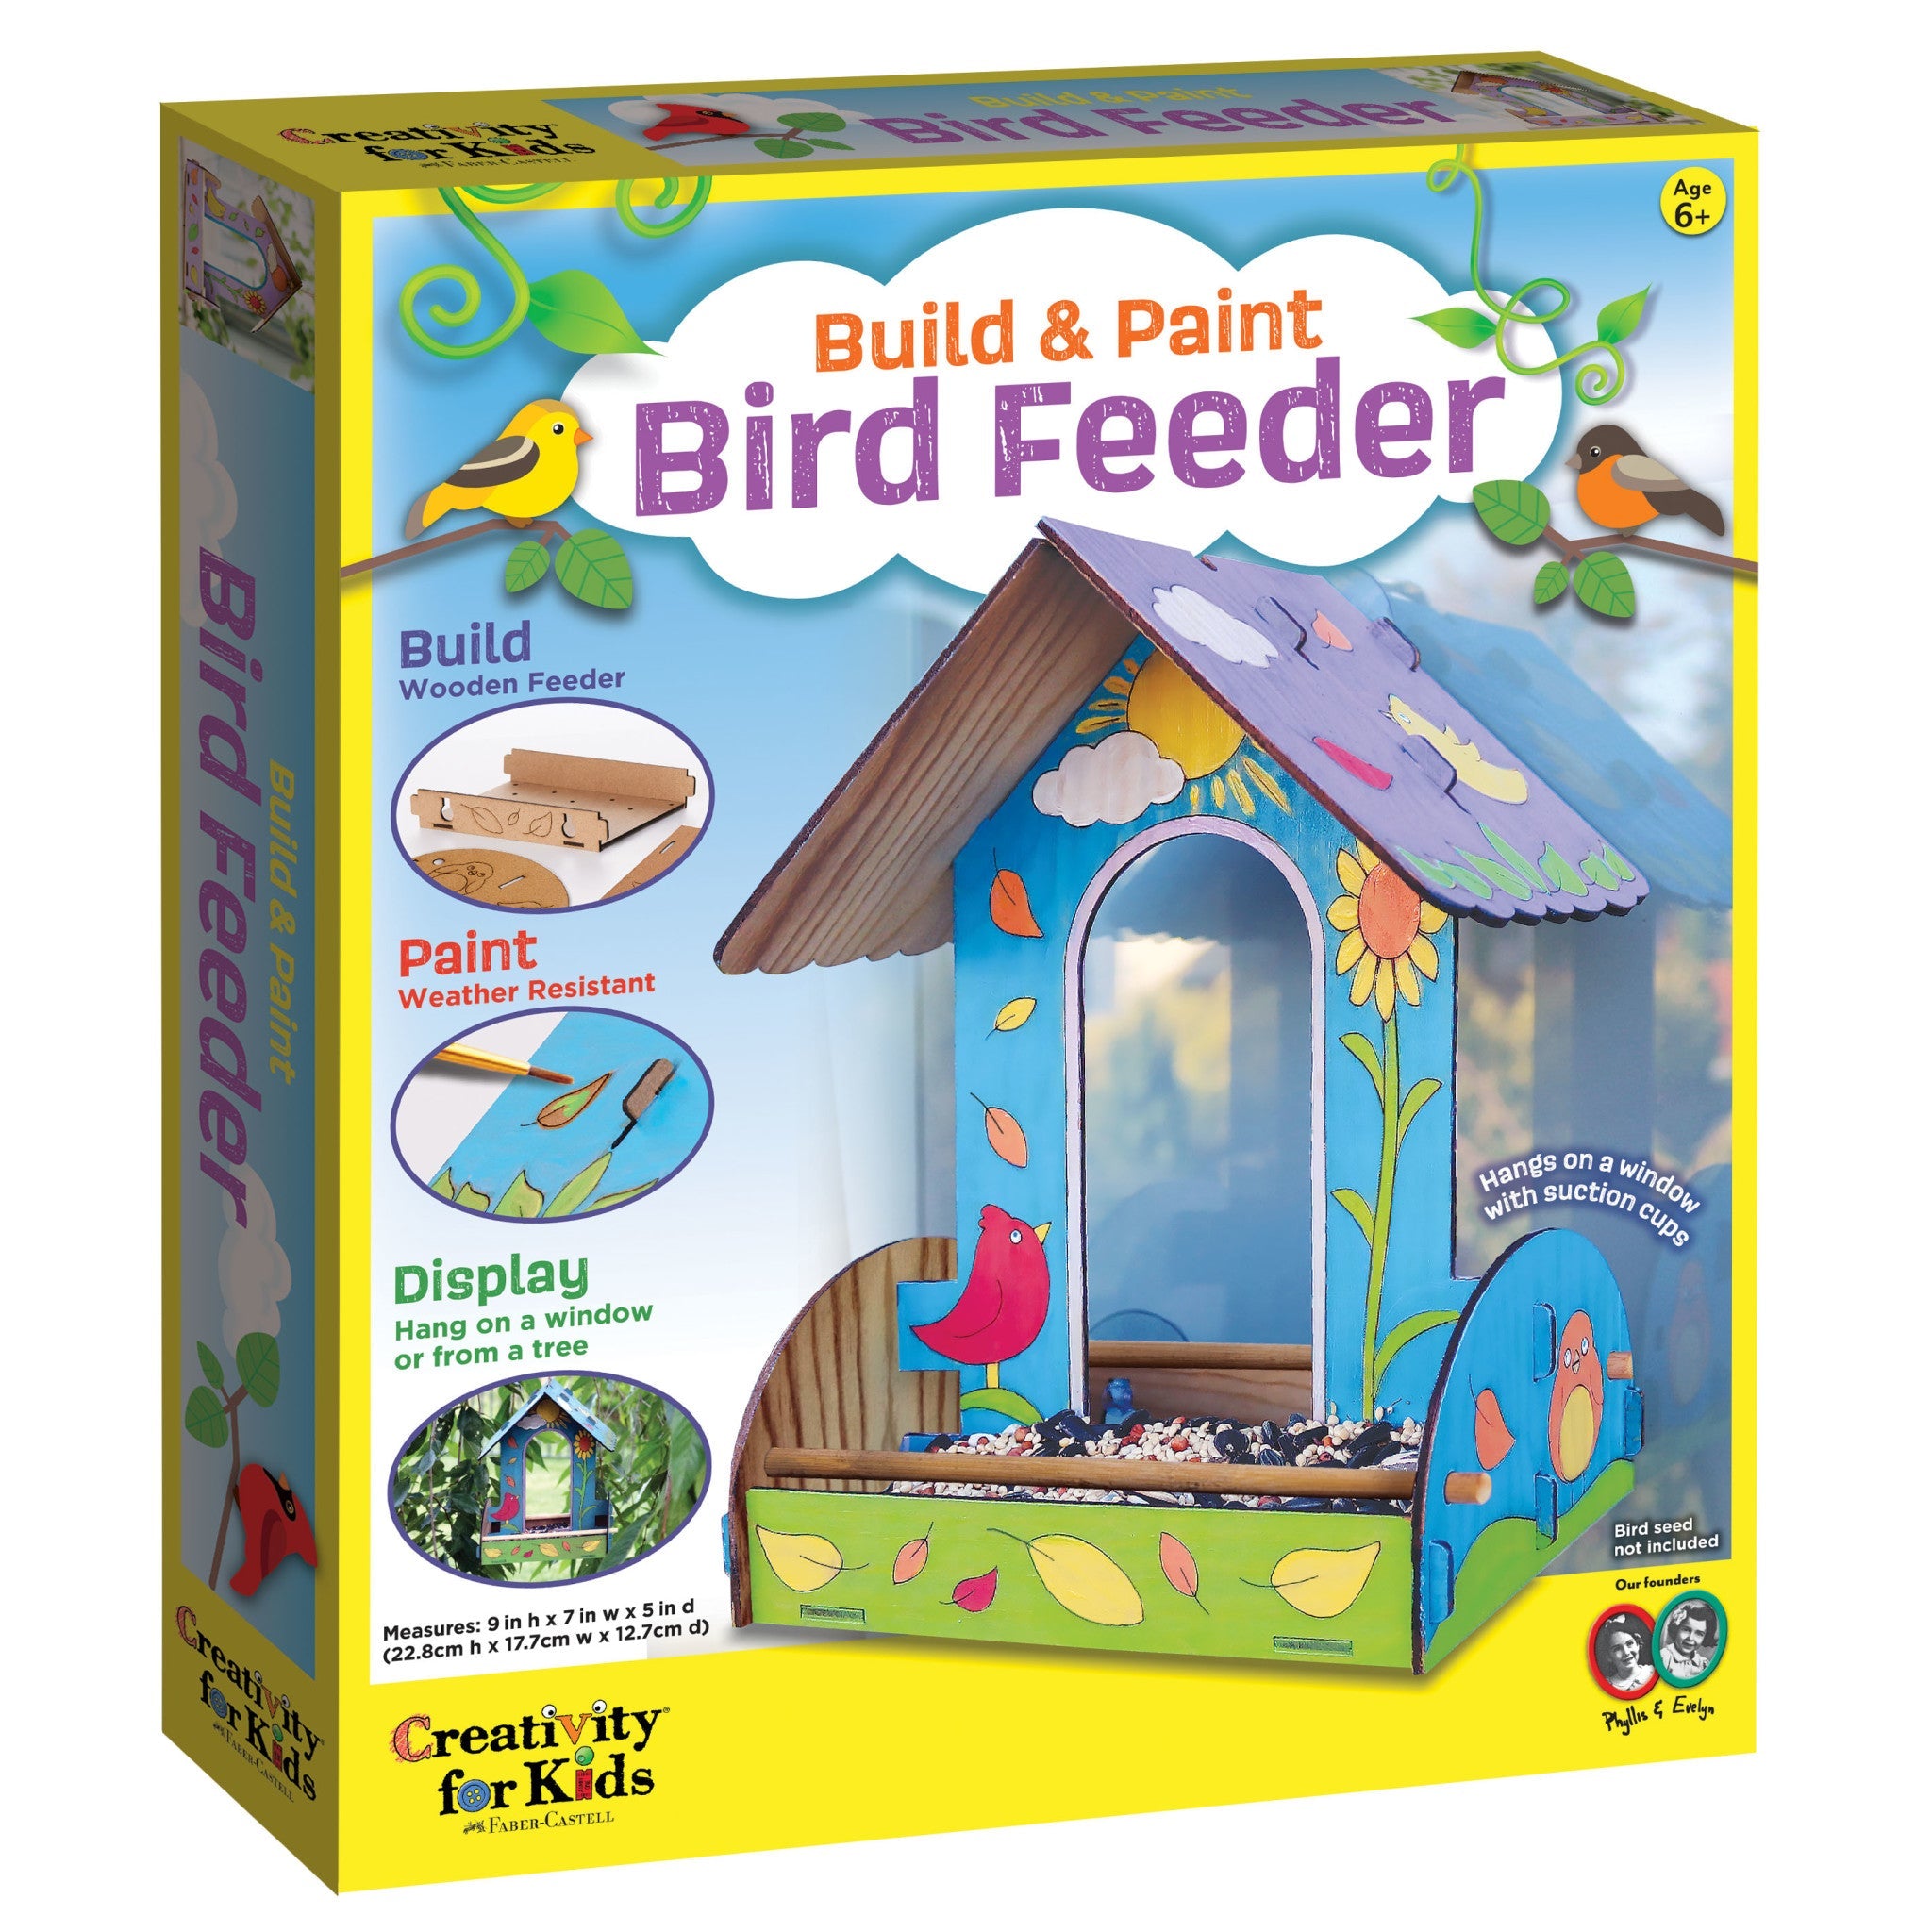 Build & Paint Bird Feeder - Ages 6+